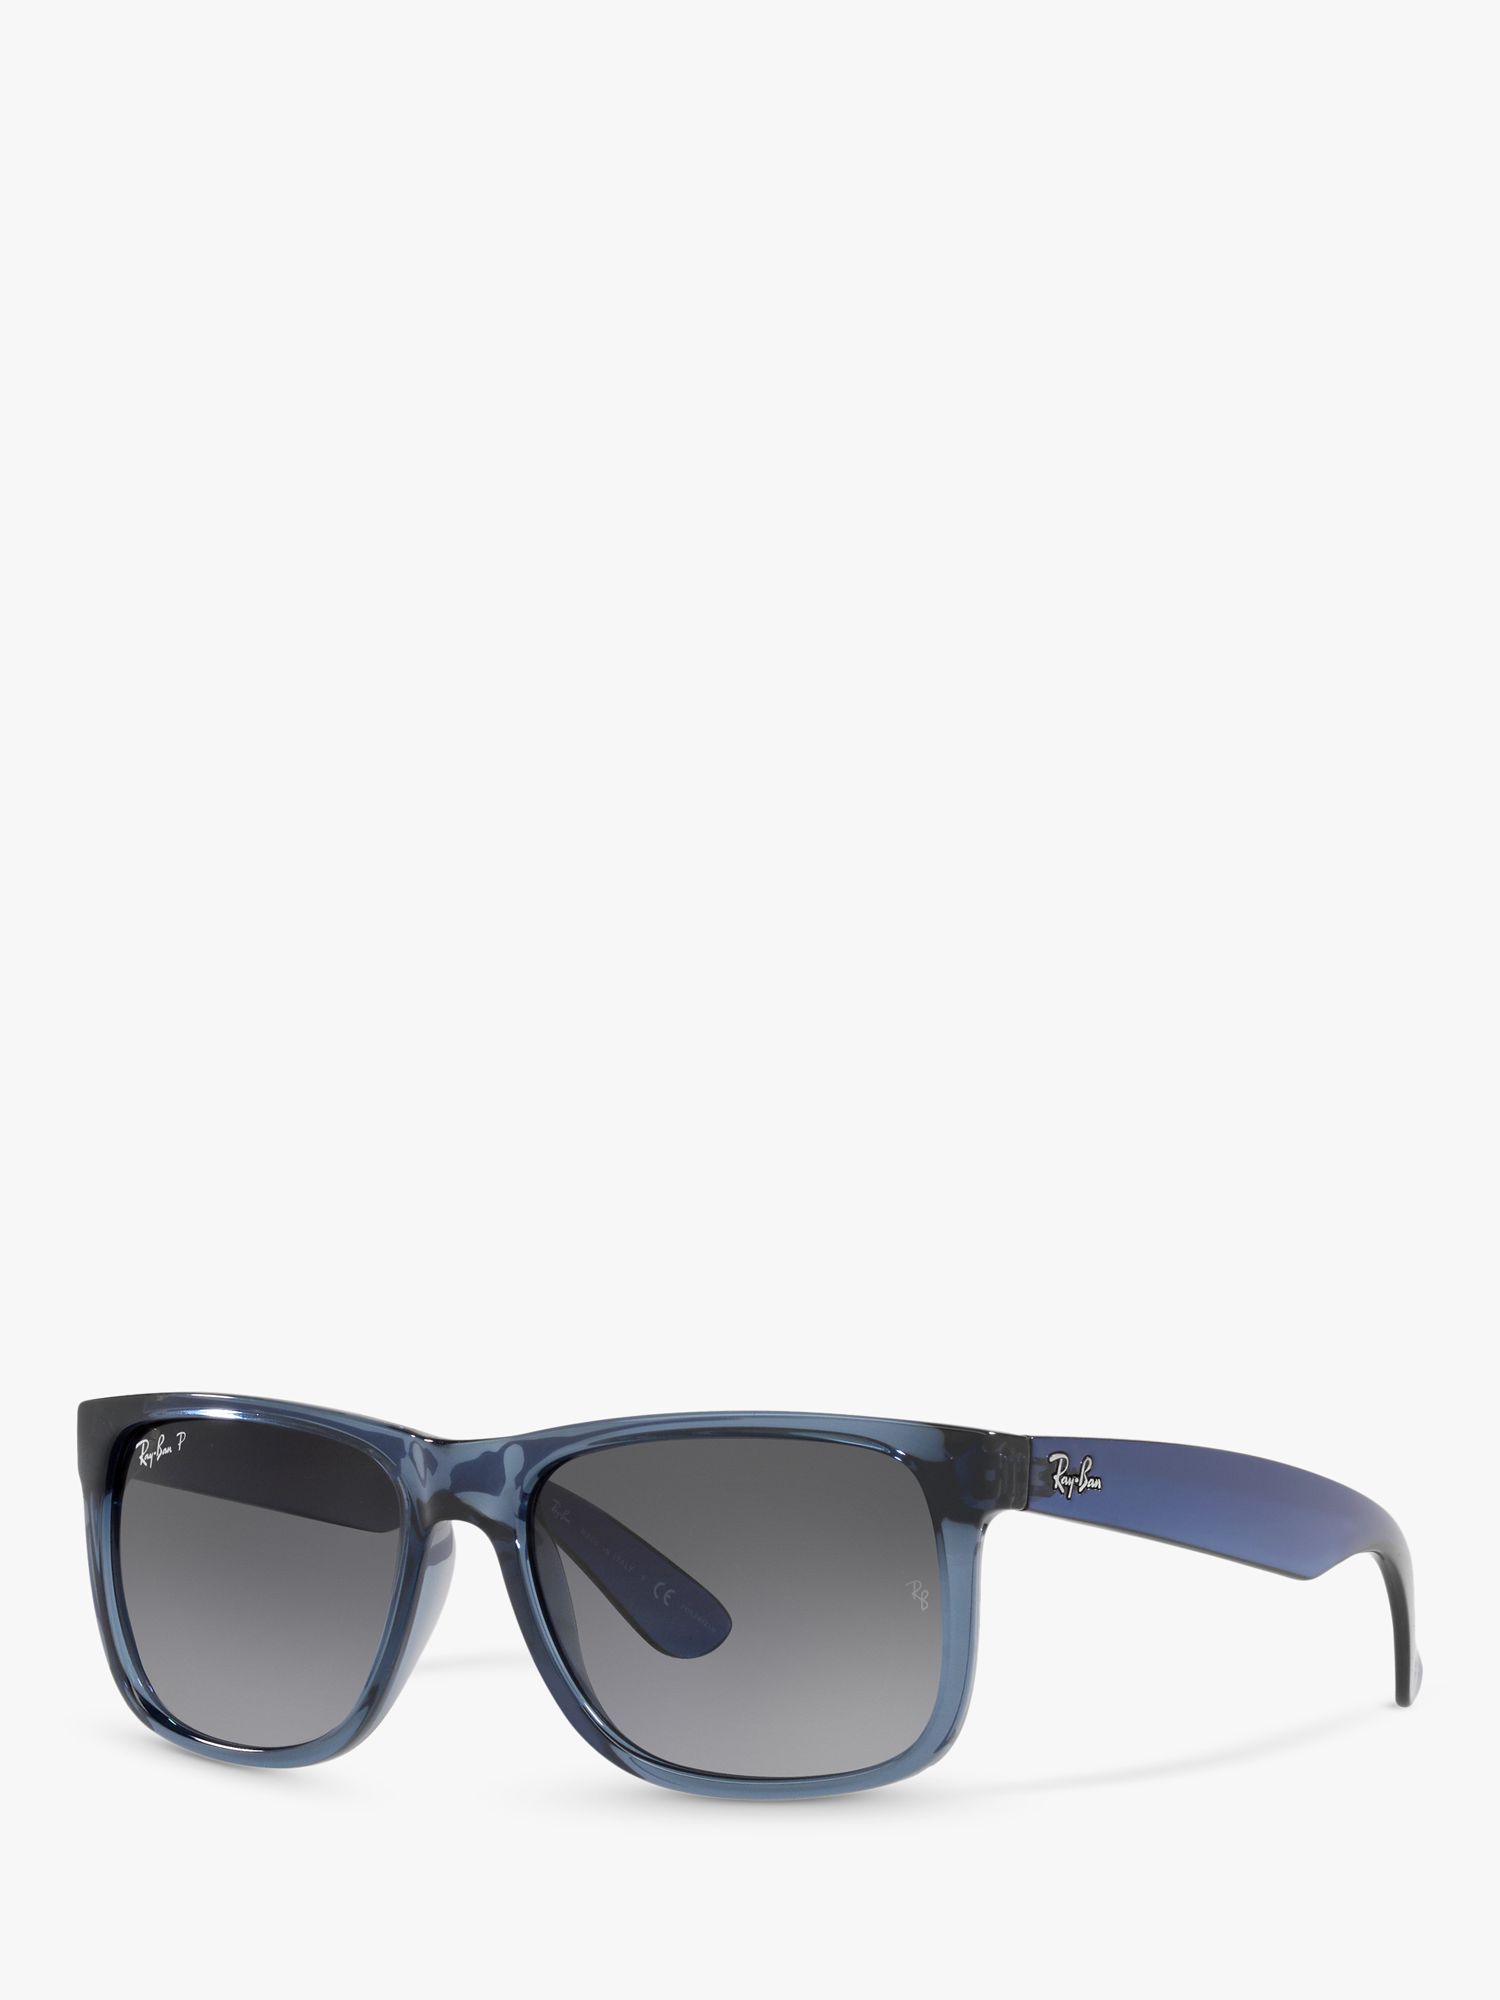 Ray-Ban RB4165 Men's Polarised Justin Square Sunglasses, Transparent  Blue/Grey Gradient at John Lewis u0026 Partners